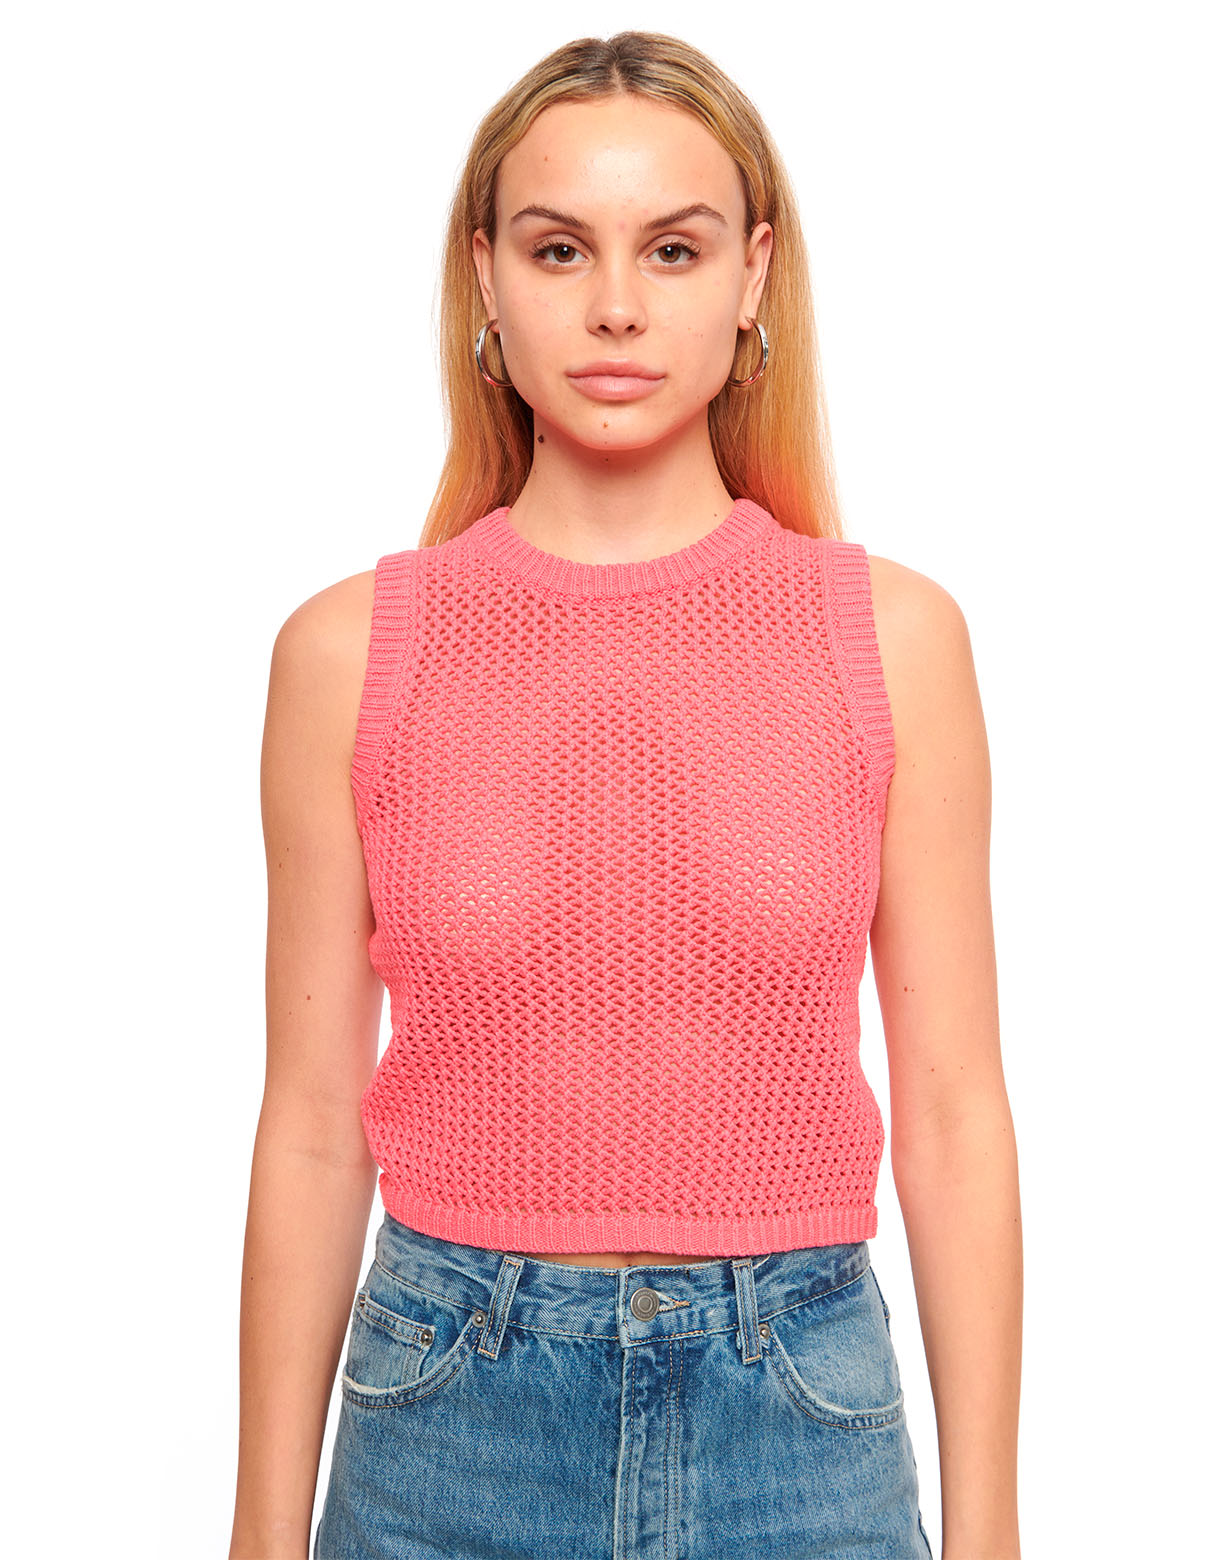 estelle crochet racer tank top hot pink - figure flattering designer fashion summer tops for women